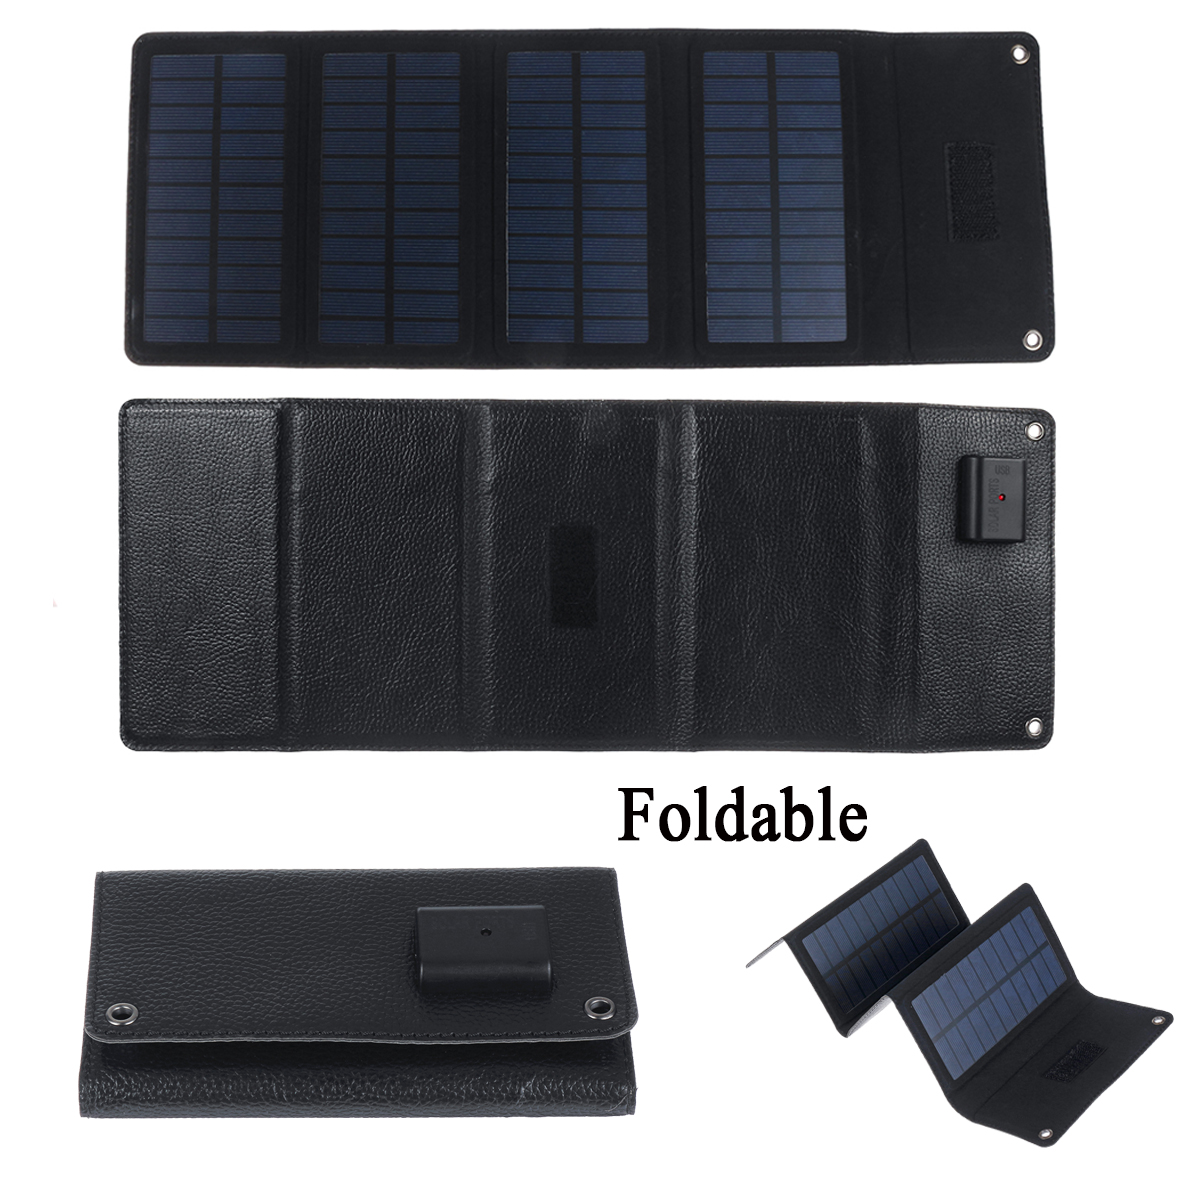 7W 5V Waterproof Foldable Mono-crystalline Silicon Solar Panel With LED Charging indicator & USB Interface 18